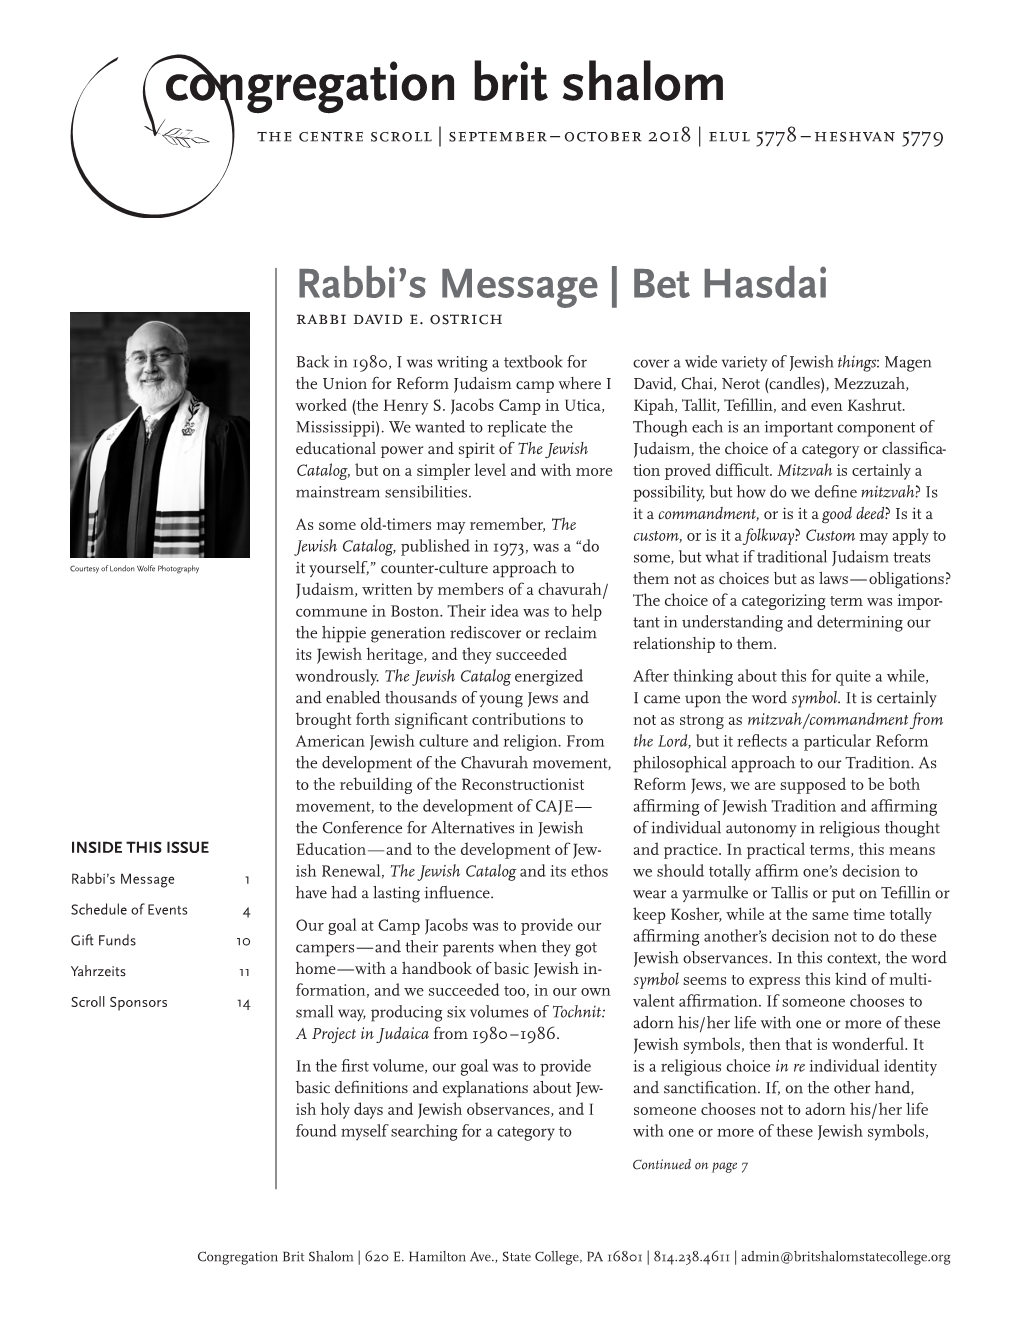 Rabbi's Message